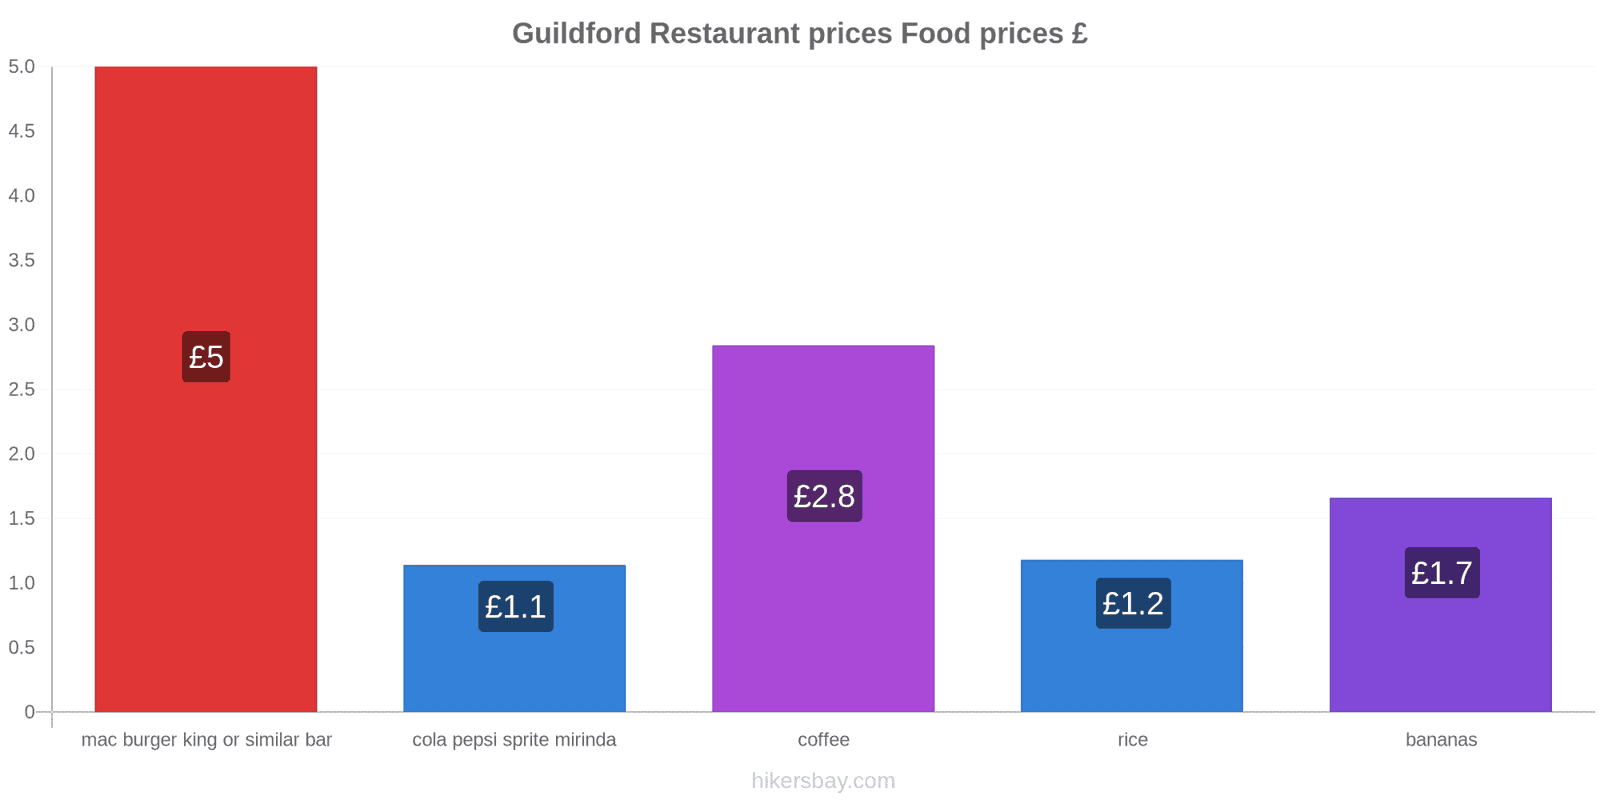 Guildford price changes hikersbay.com